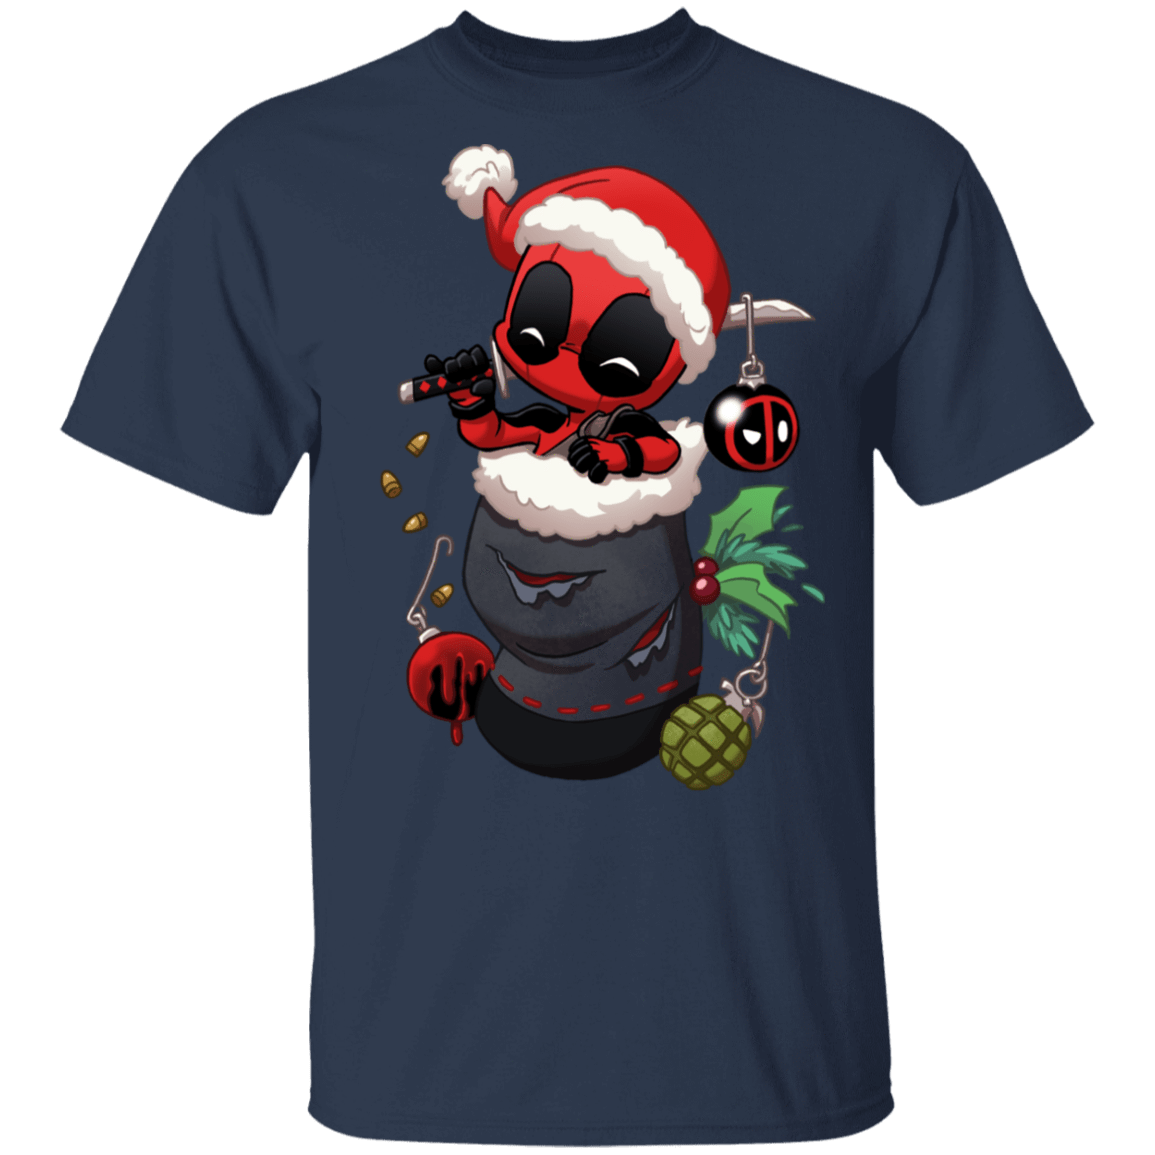 T-Shirts Navy / S Stocking Stuffer Deadpool T-Shirt